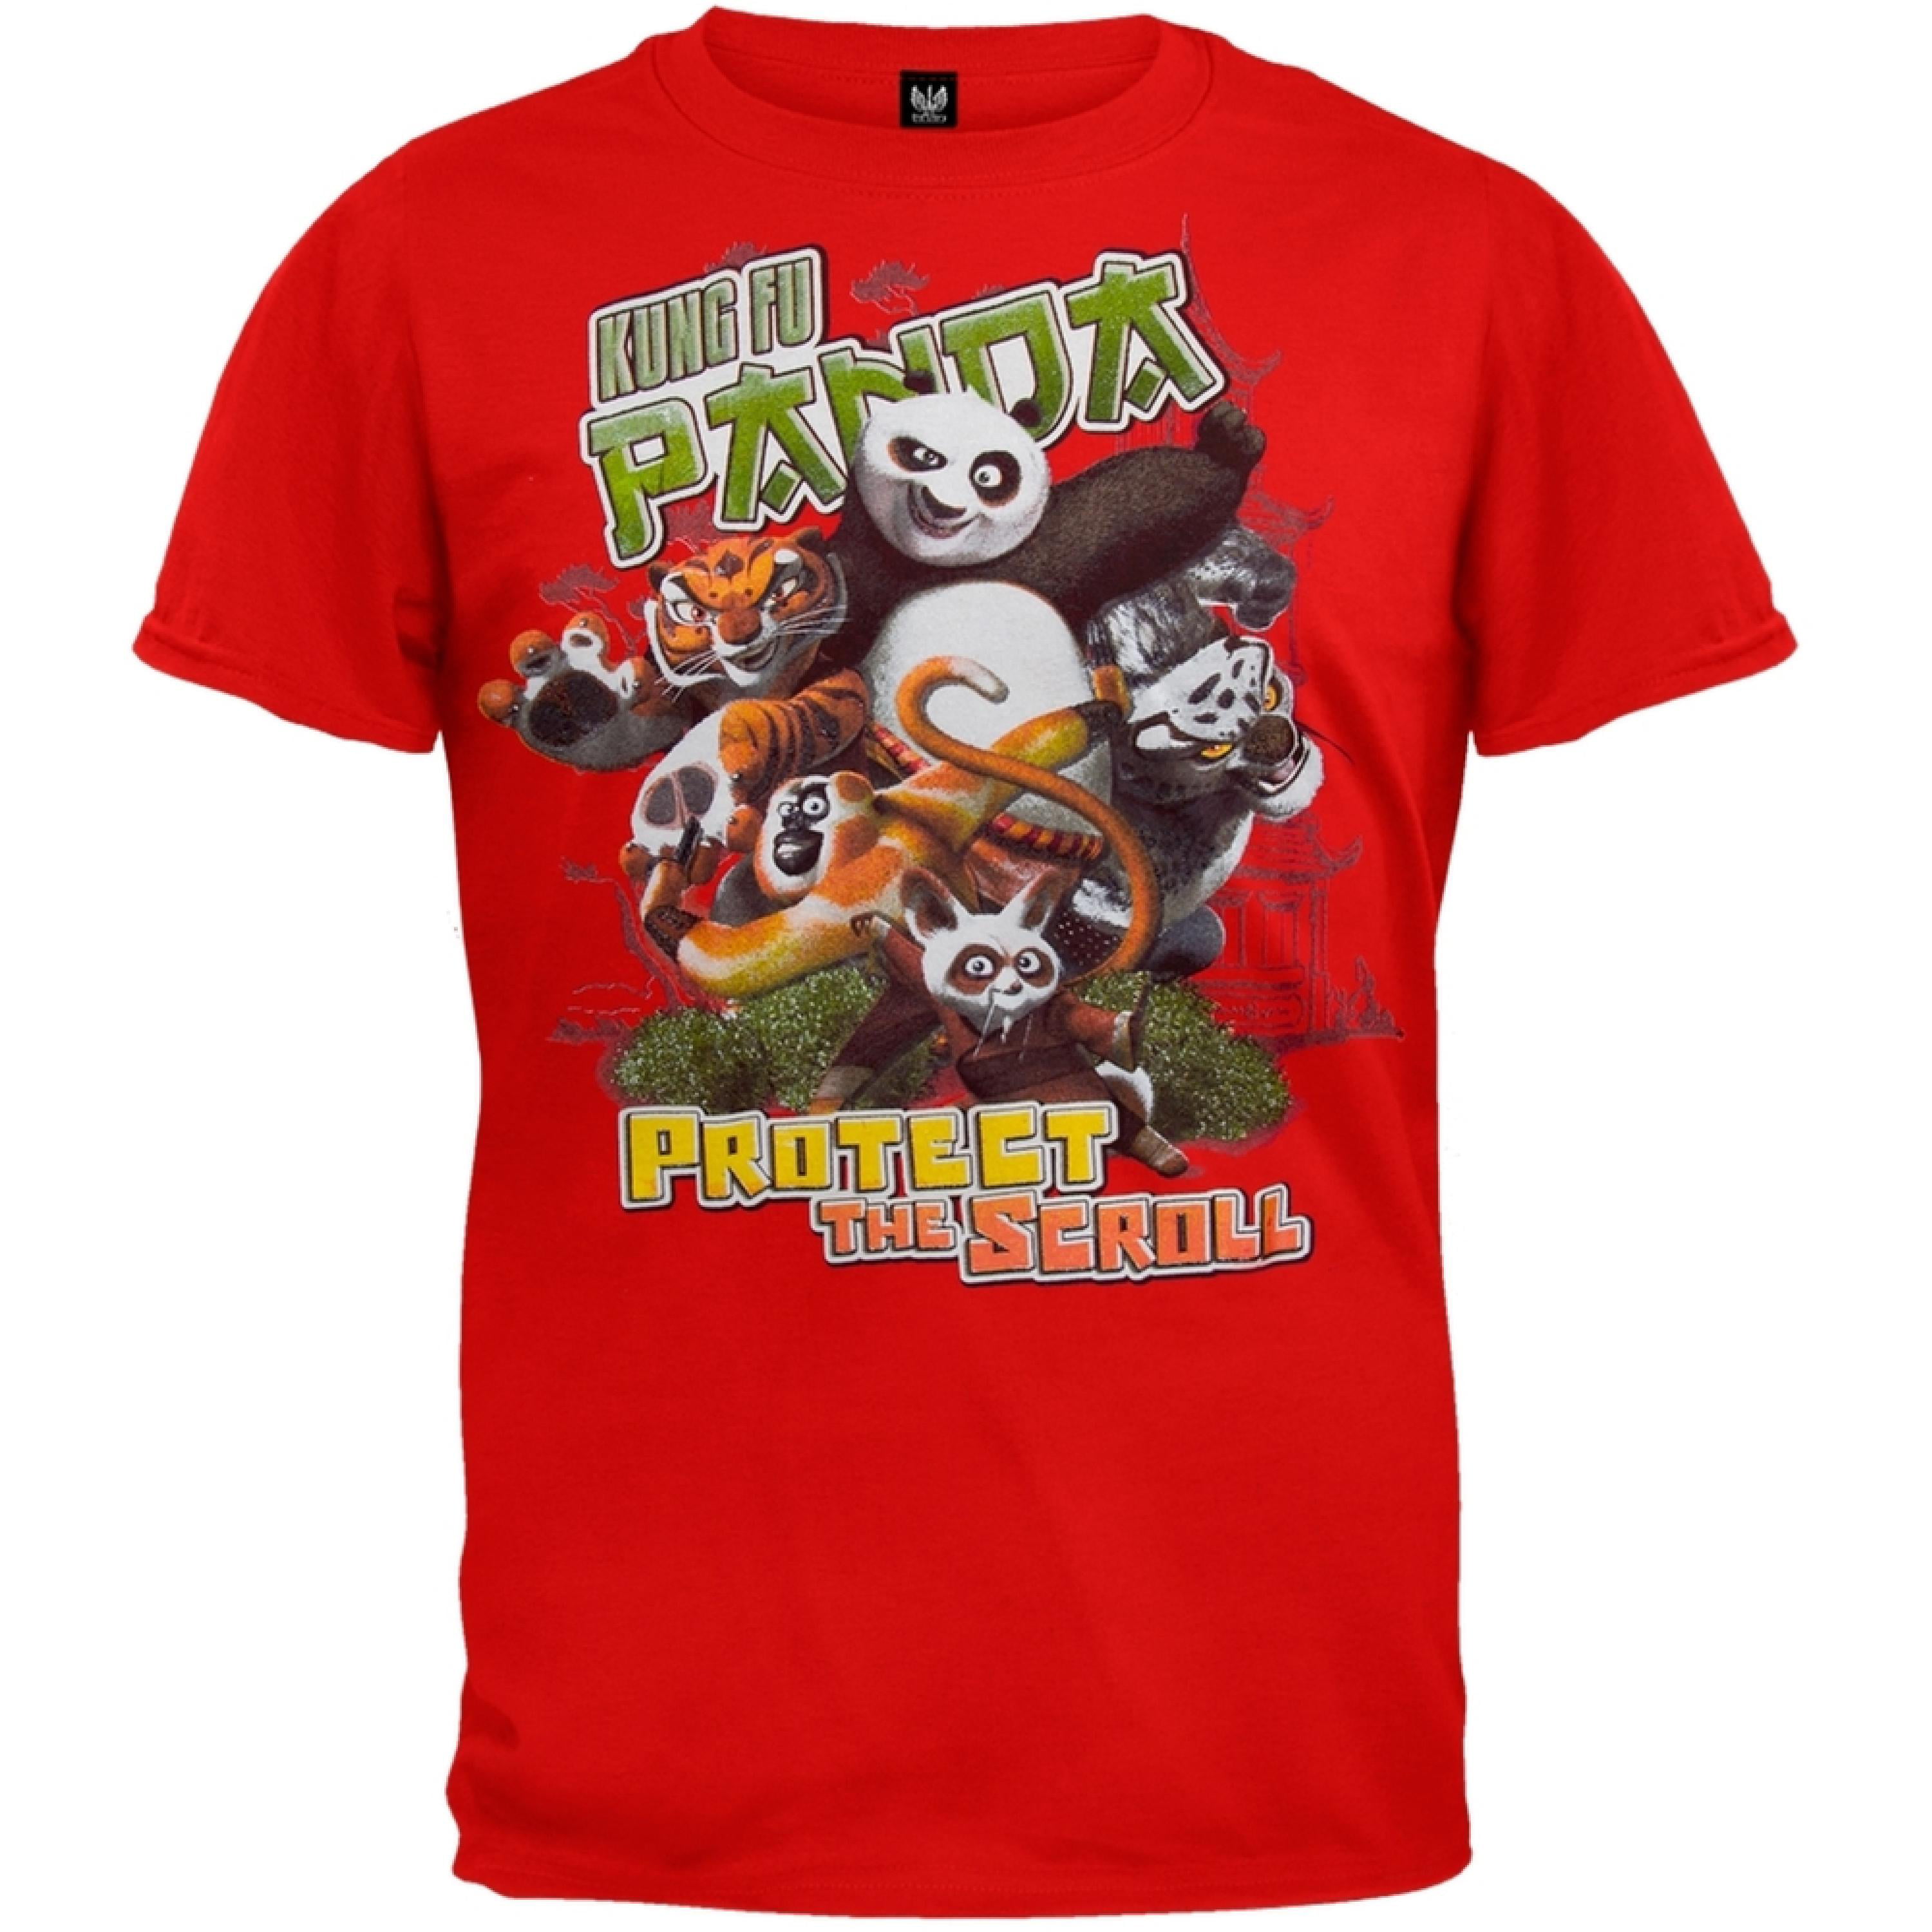 Kung Fu Panda - Kung-Fu Panda - Protect T-Shirt - Walmart.com - Walmart.com